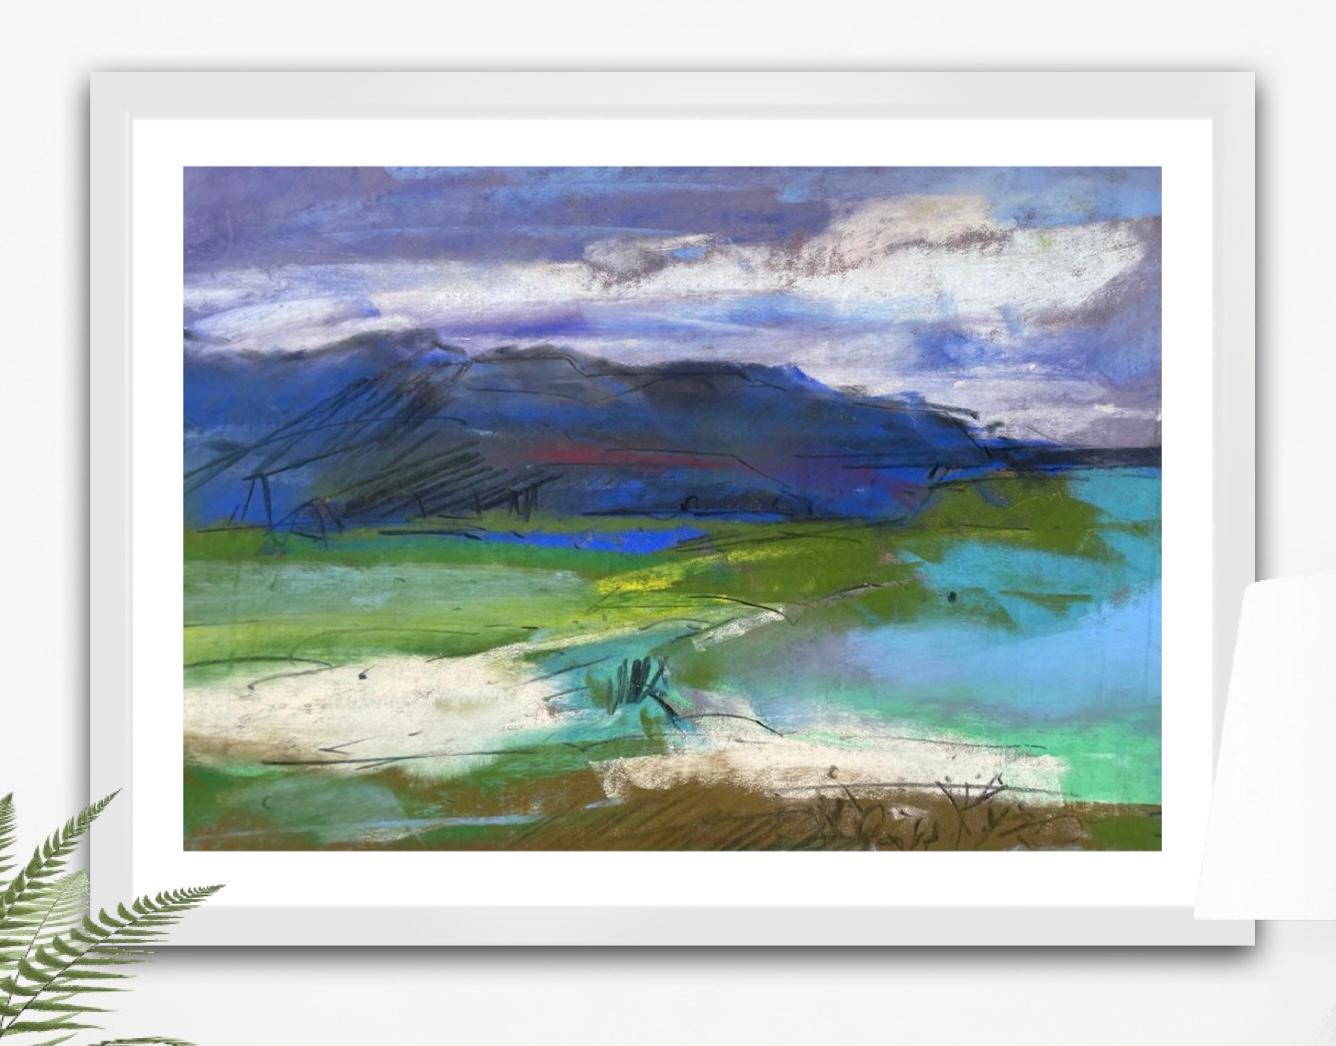 Loch Fyne, Meereslandschaft, Himmelslandschaft, Schottland, Berge, Wanderung  (Abstrakter Expressionismus), Painting, von Natalie Bird